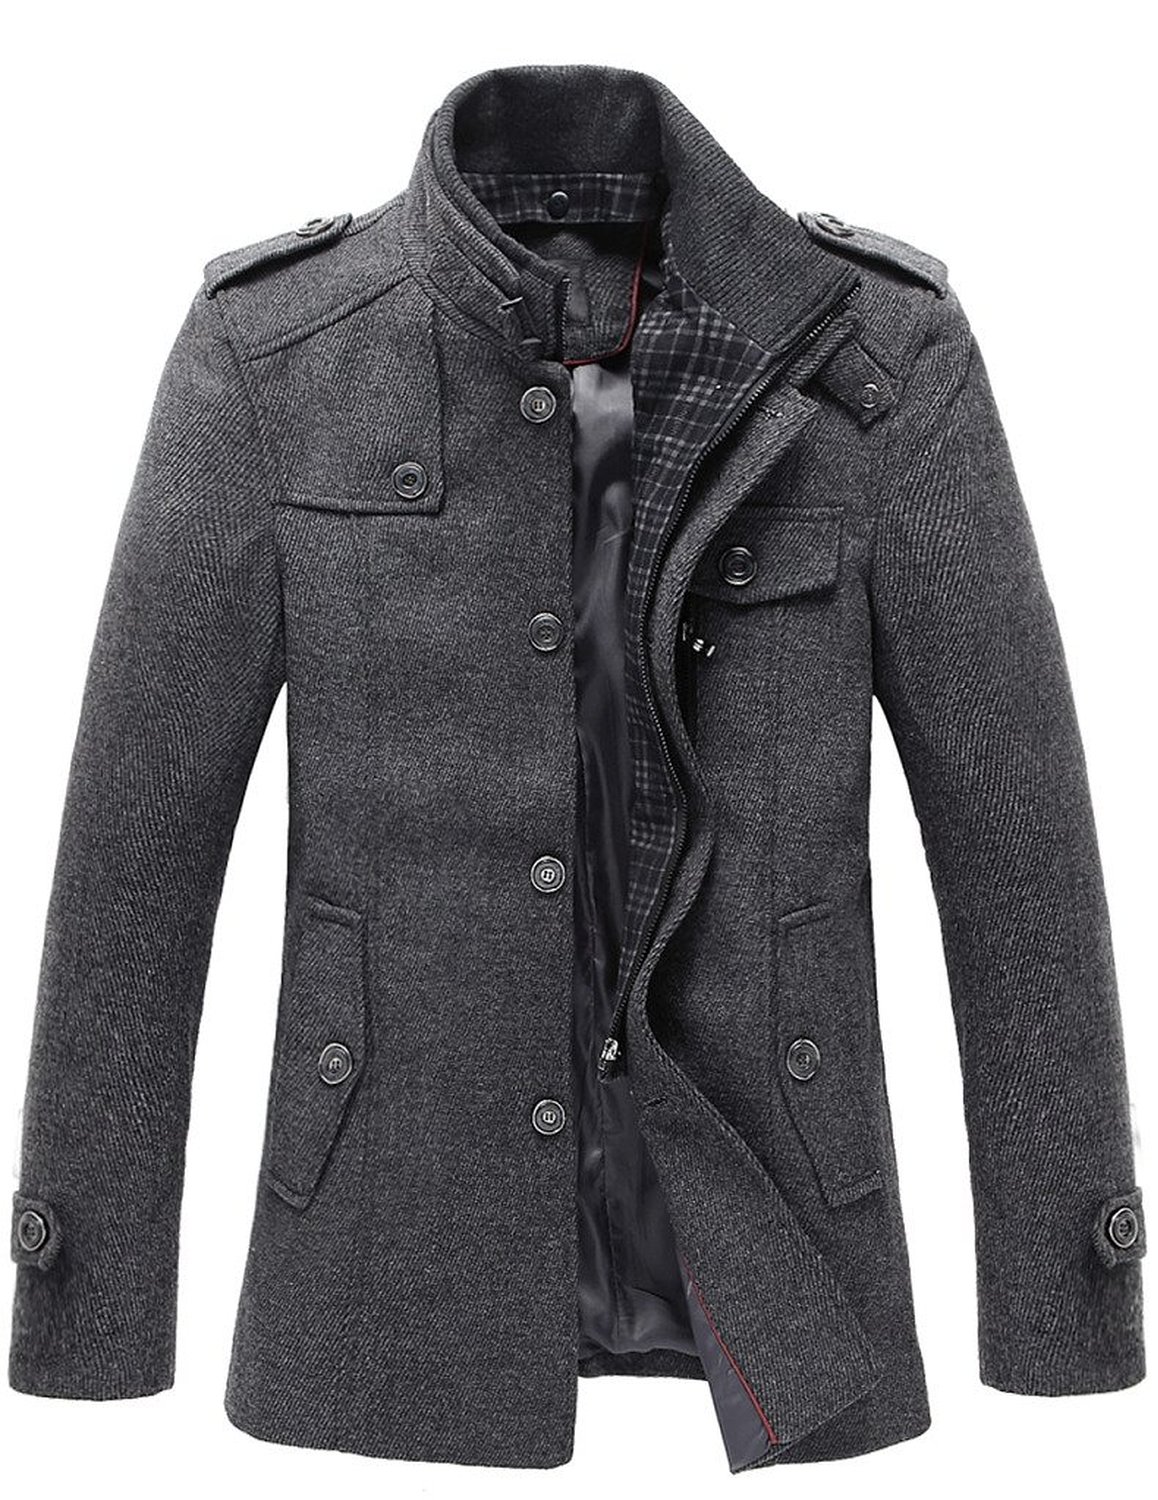 Wool Classic Pea Coat Winter Coat - Mens Urban Clothing